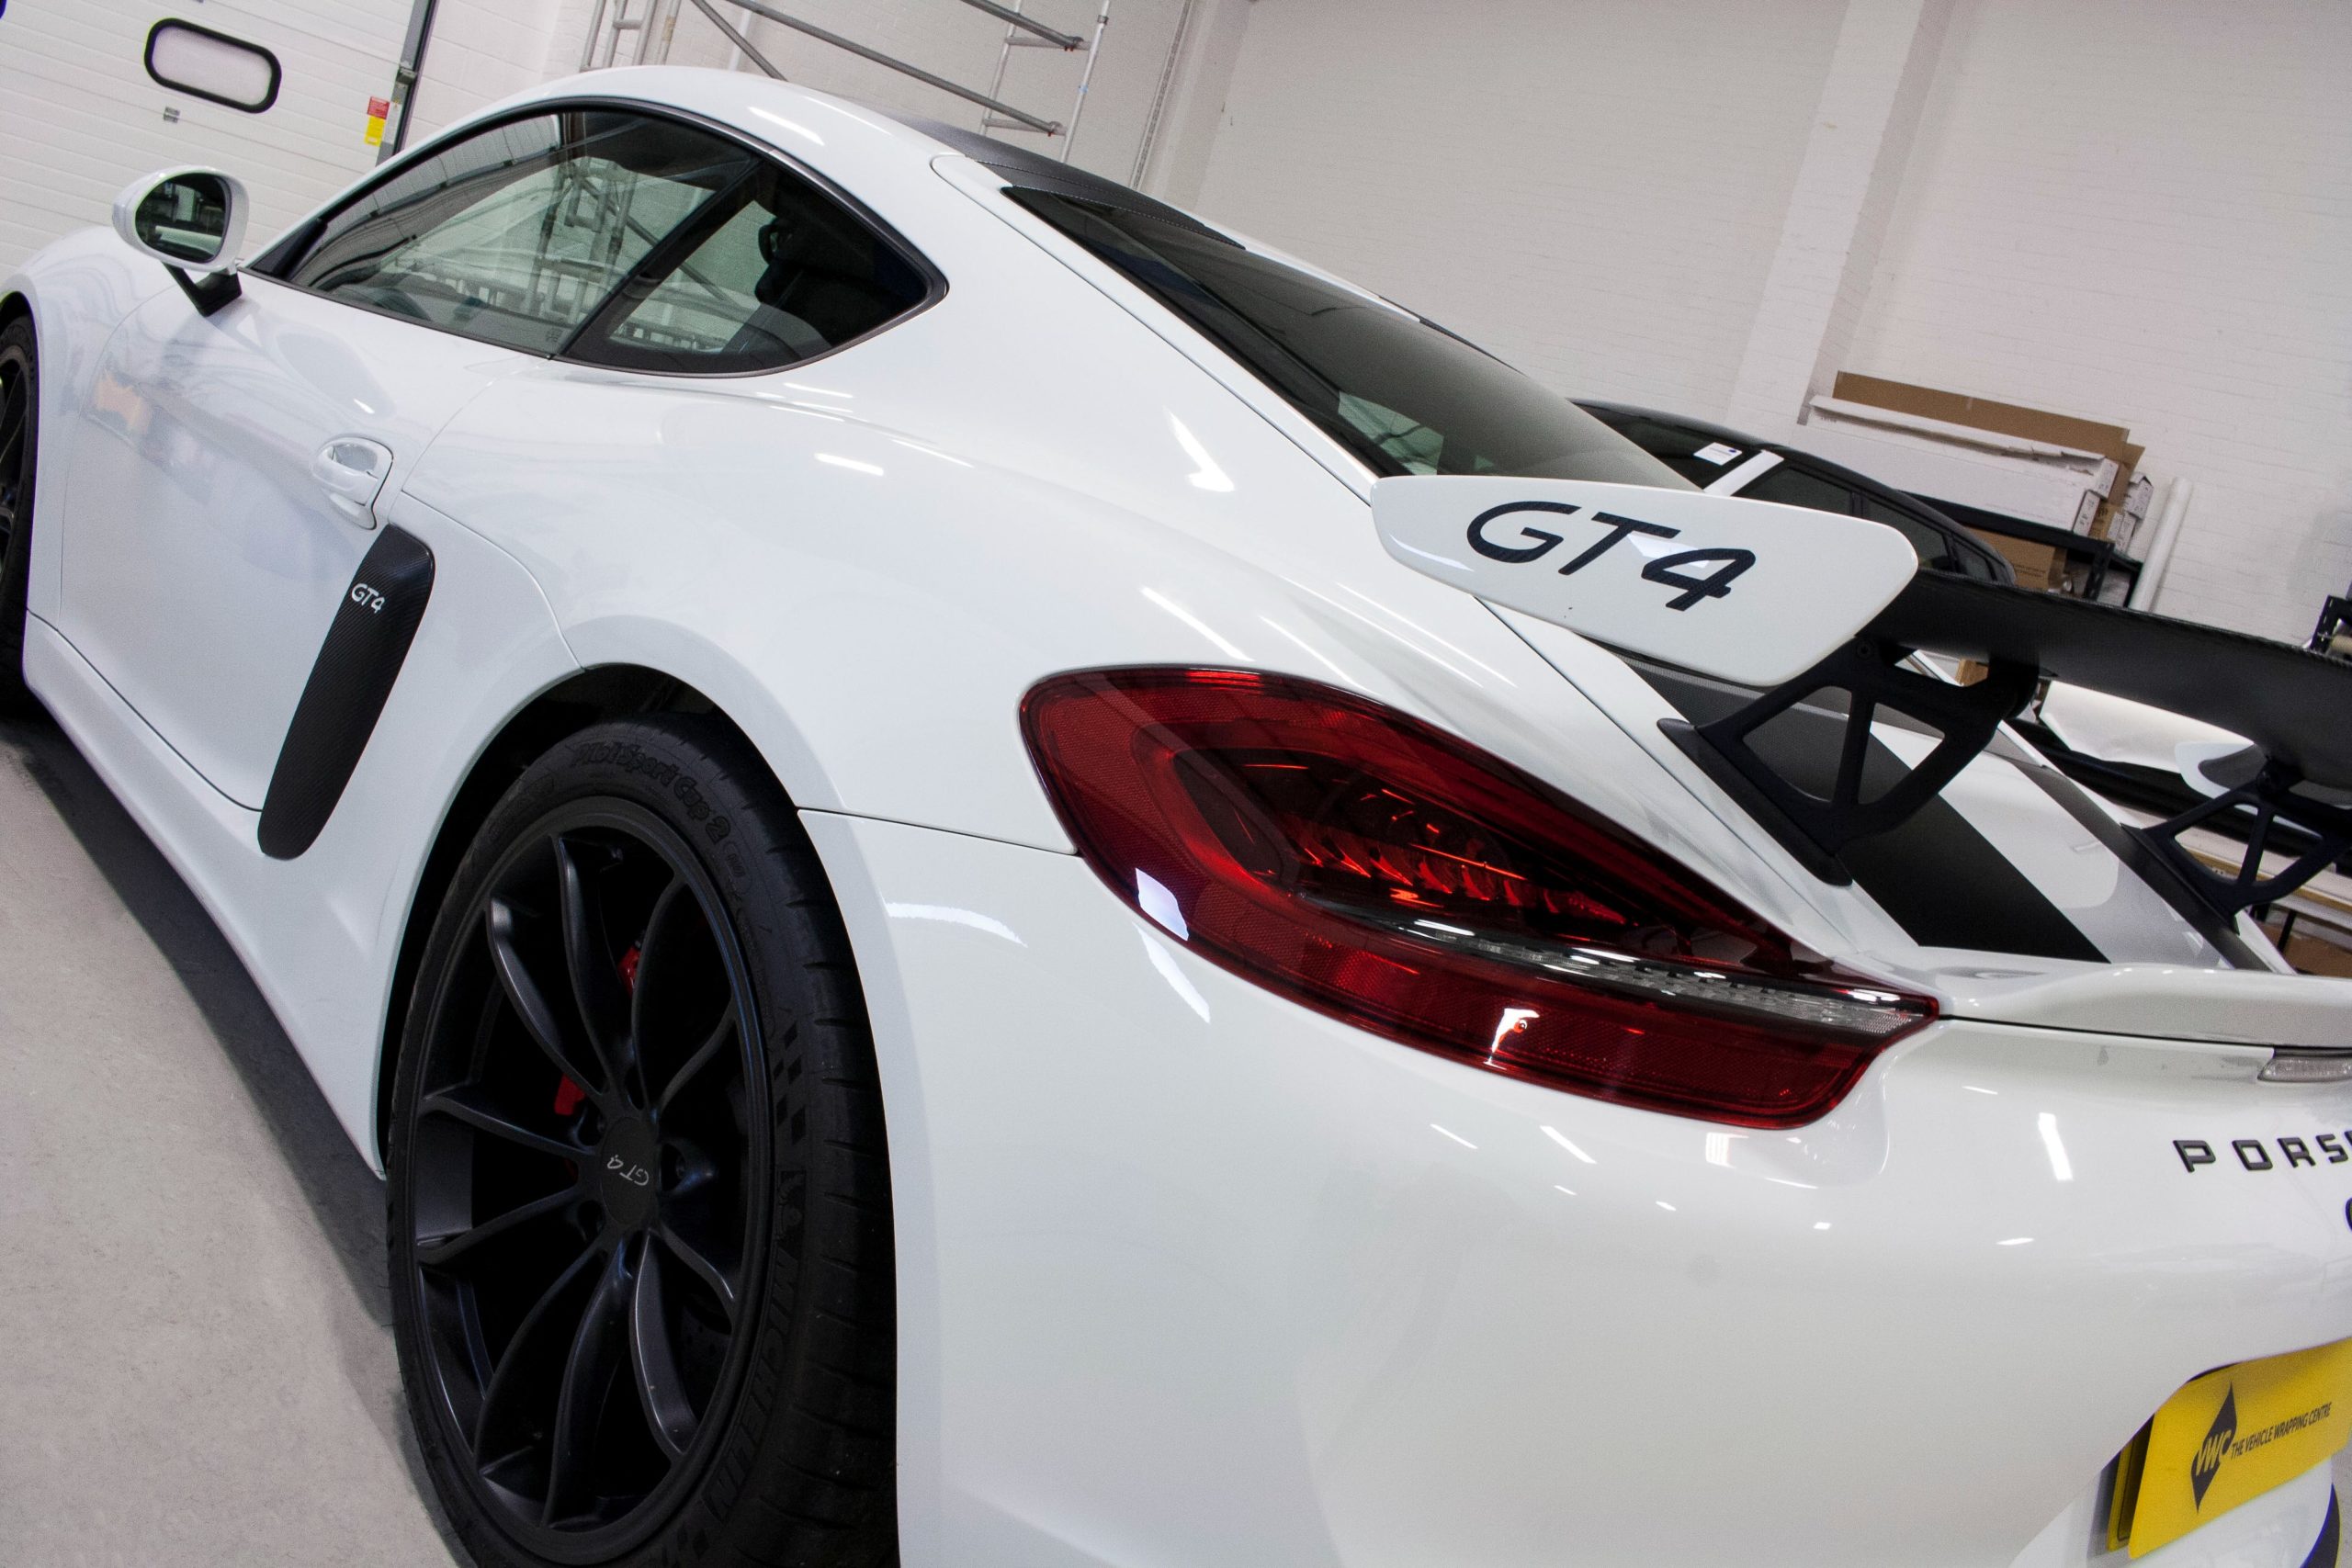 Porsche Cayman GT4 - 3M Carbon Fibre - Personal Wrapping Project